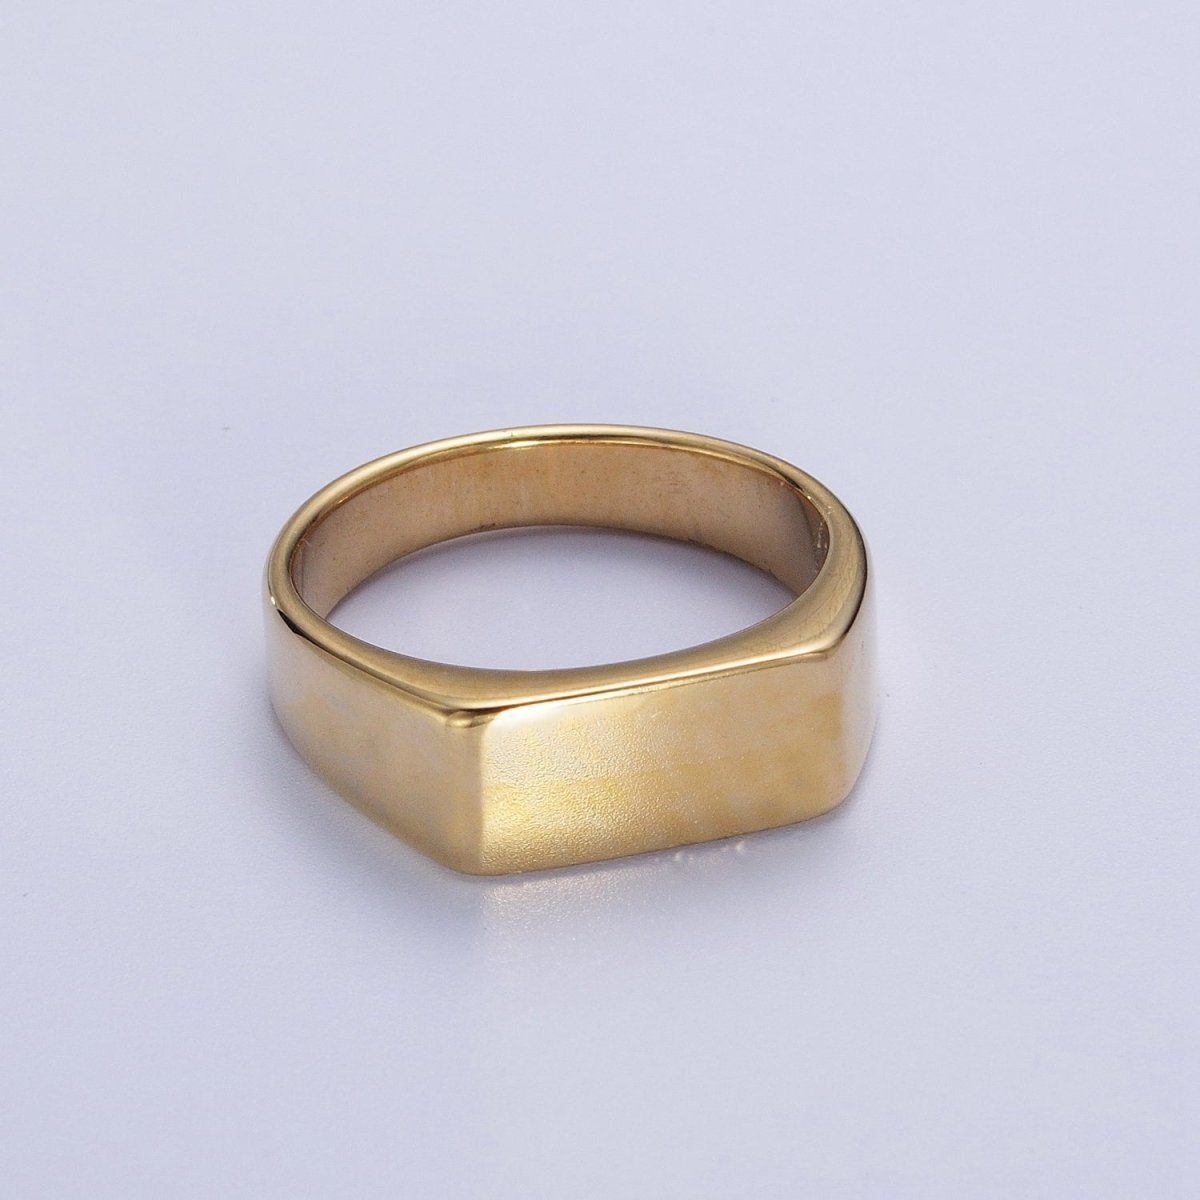 Stainless Steel Rectangular Bar Minimalist Gold, Silver Ring | O2019 O2020 O2021 O2022 - DLUXCA